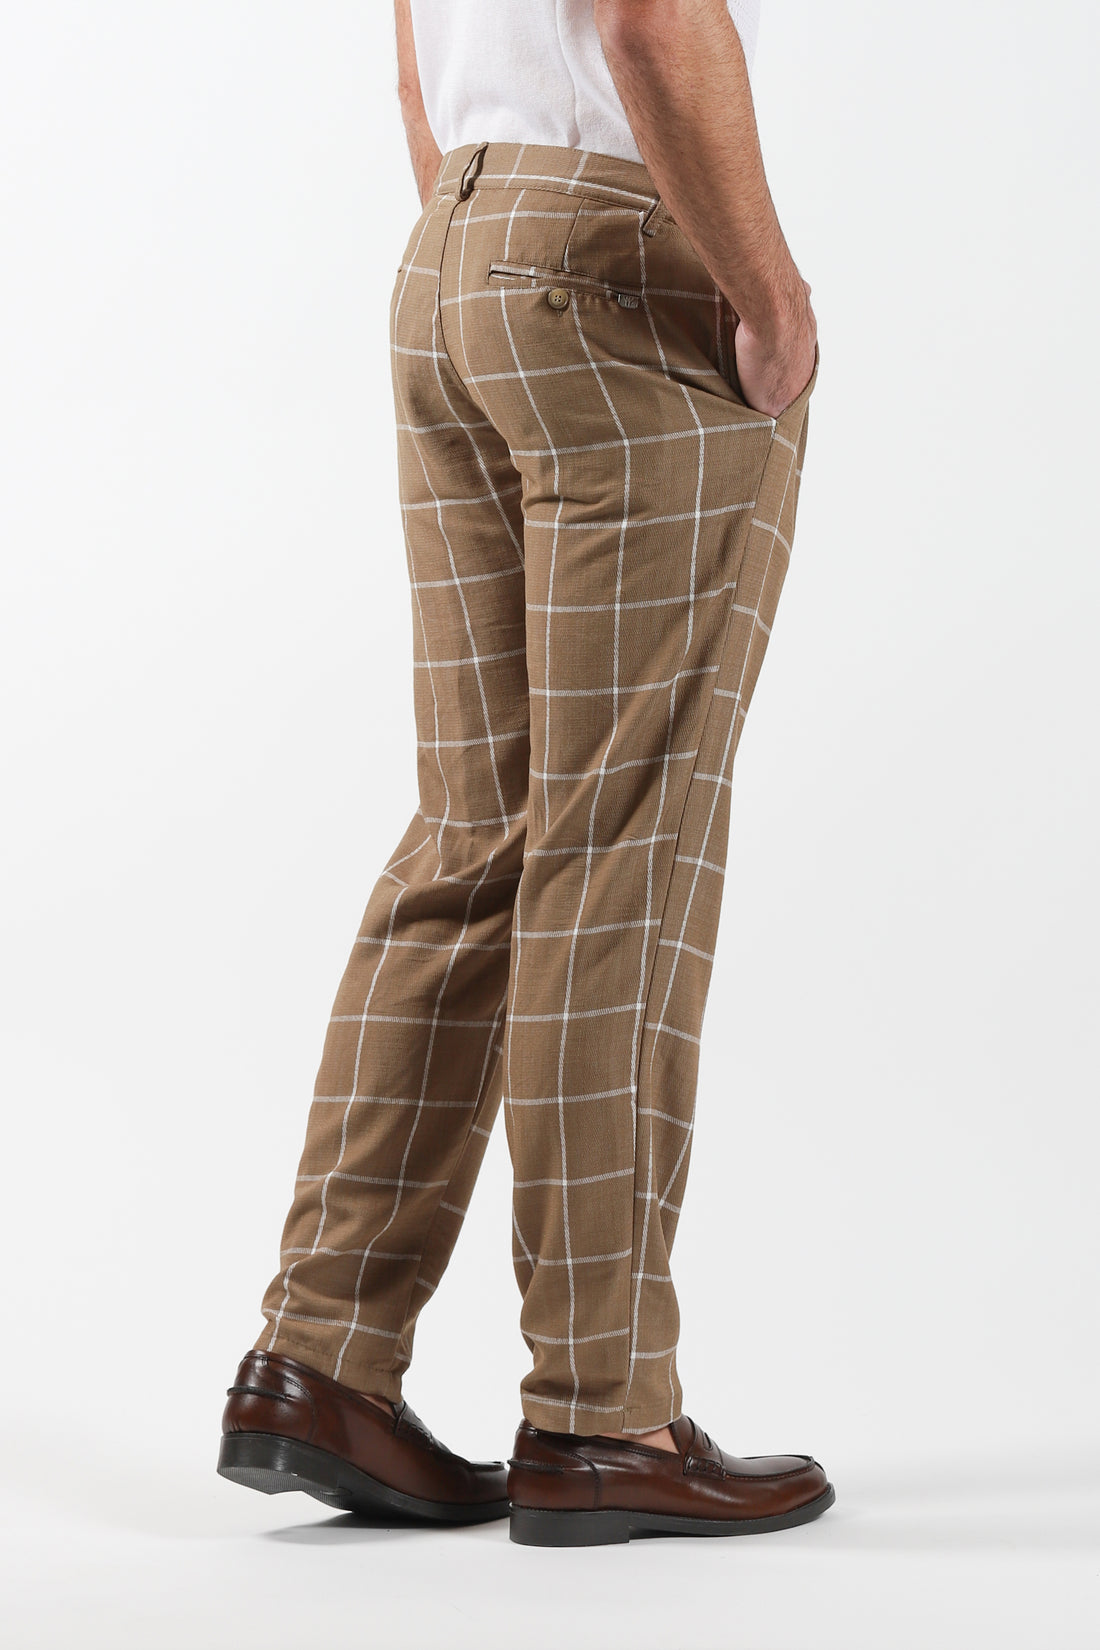 Pantalone quadro elastico laterale - Beige